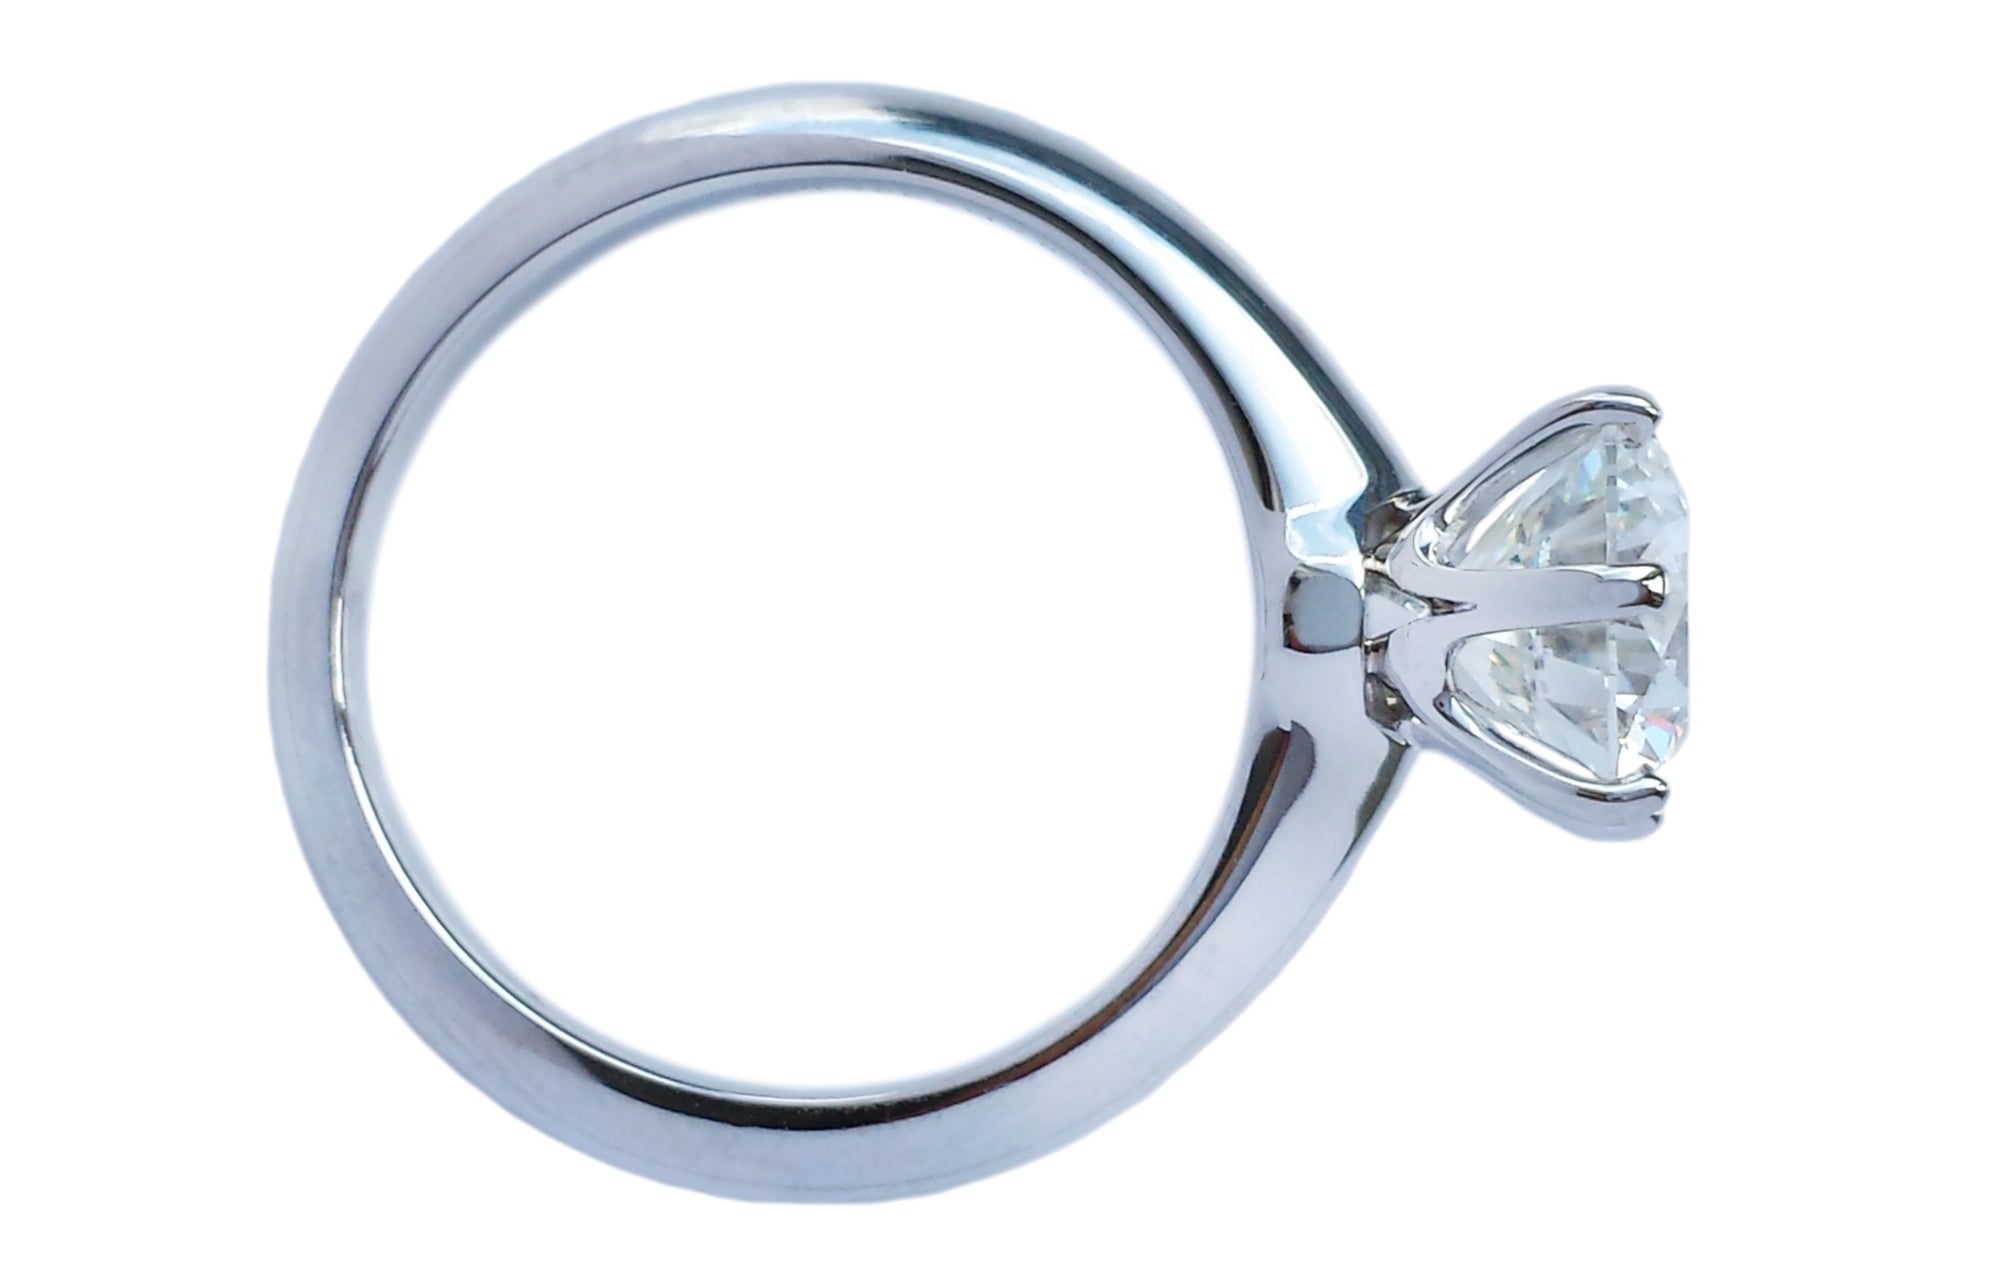 Tiffany & Co. 1.71ct H/VVS2 Round Brilliant Diamond Engagement Ring